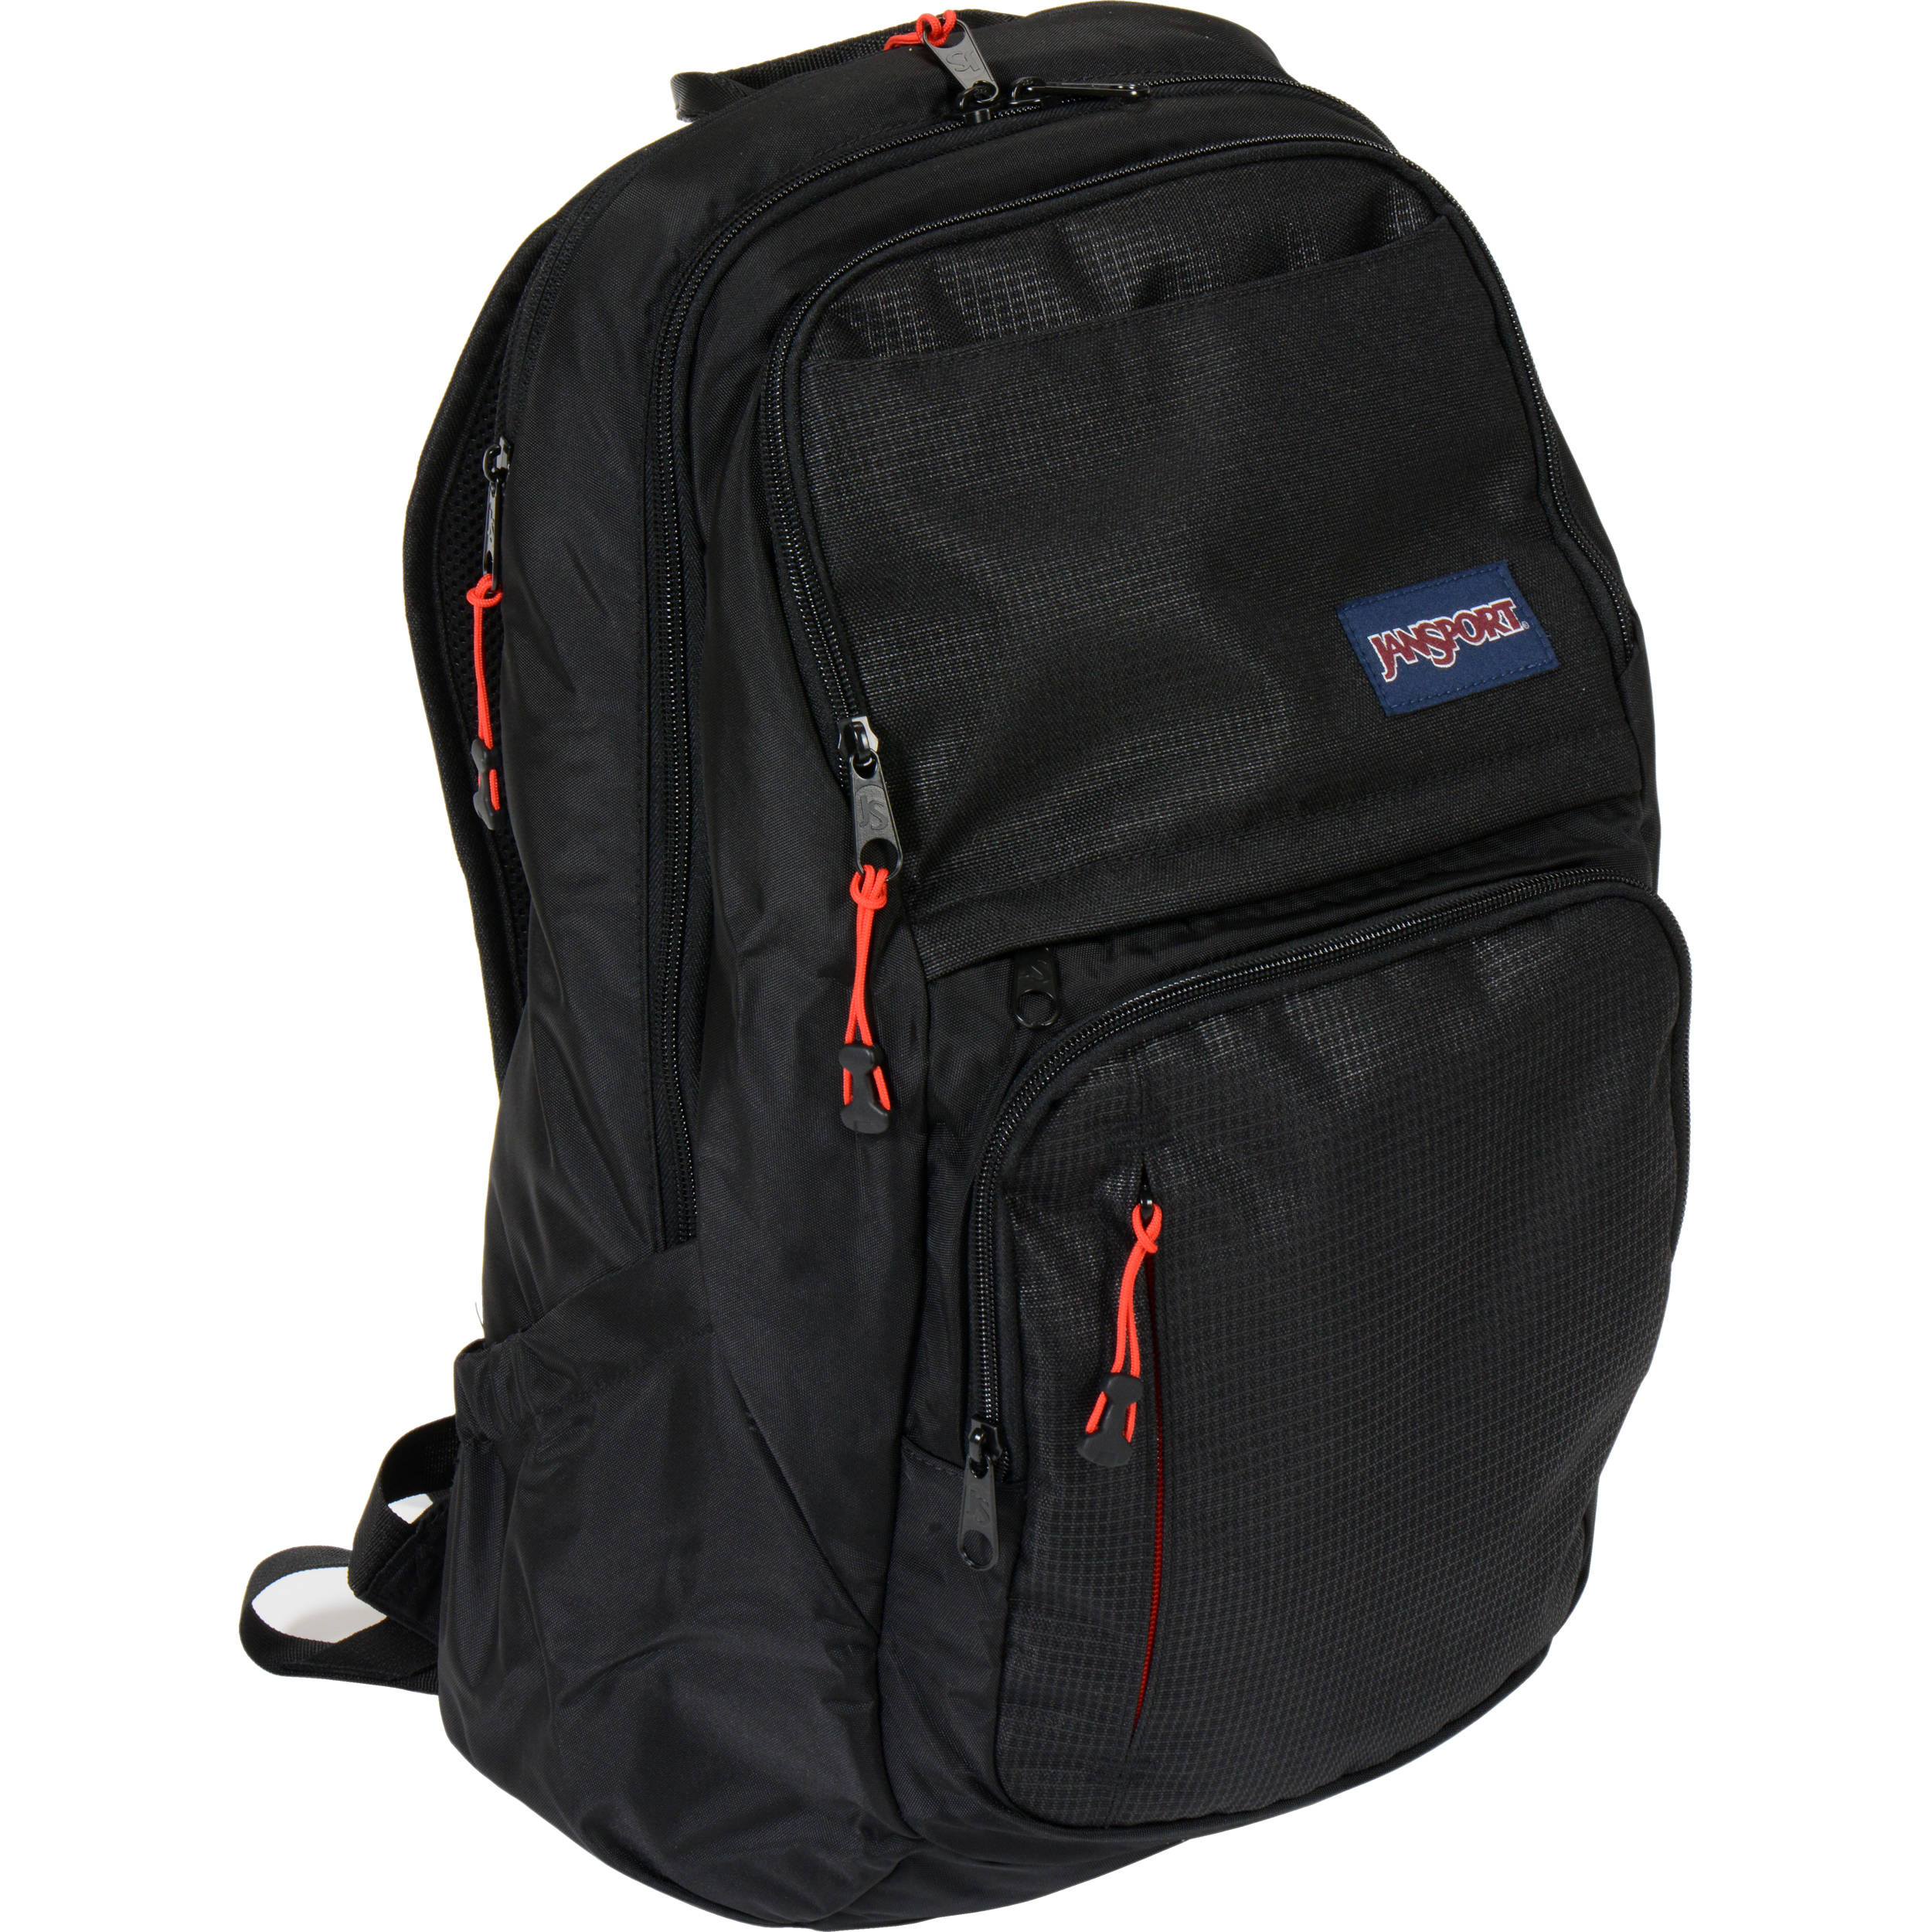 jansport tech backpack